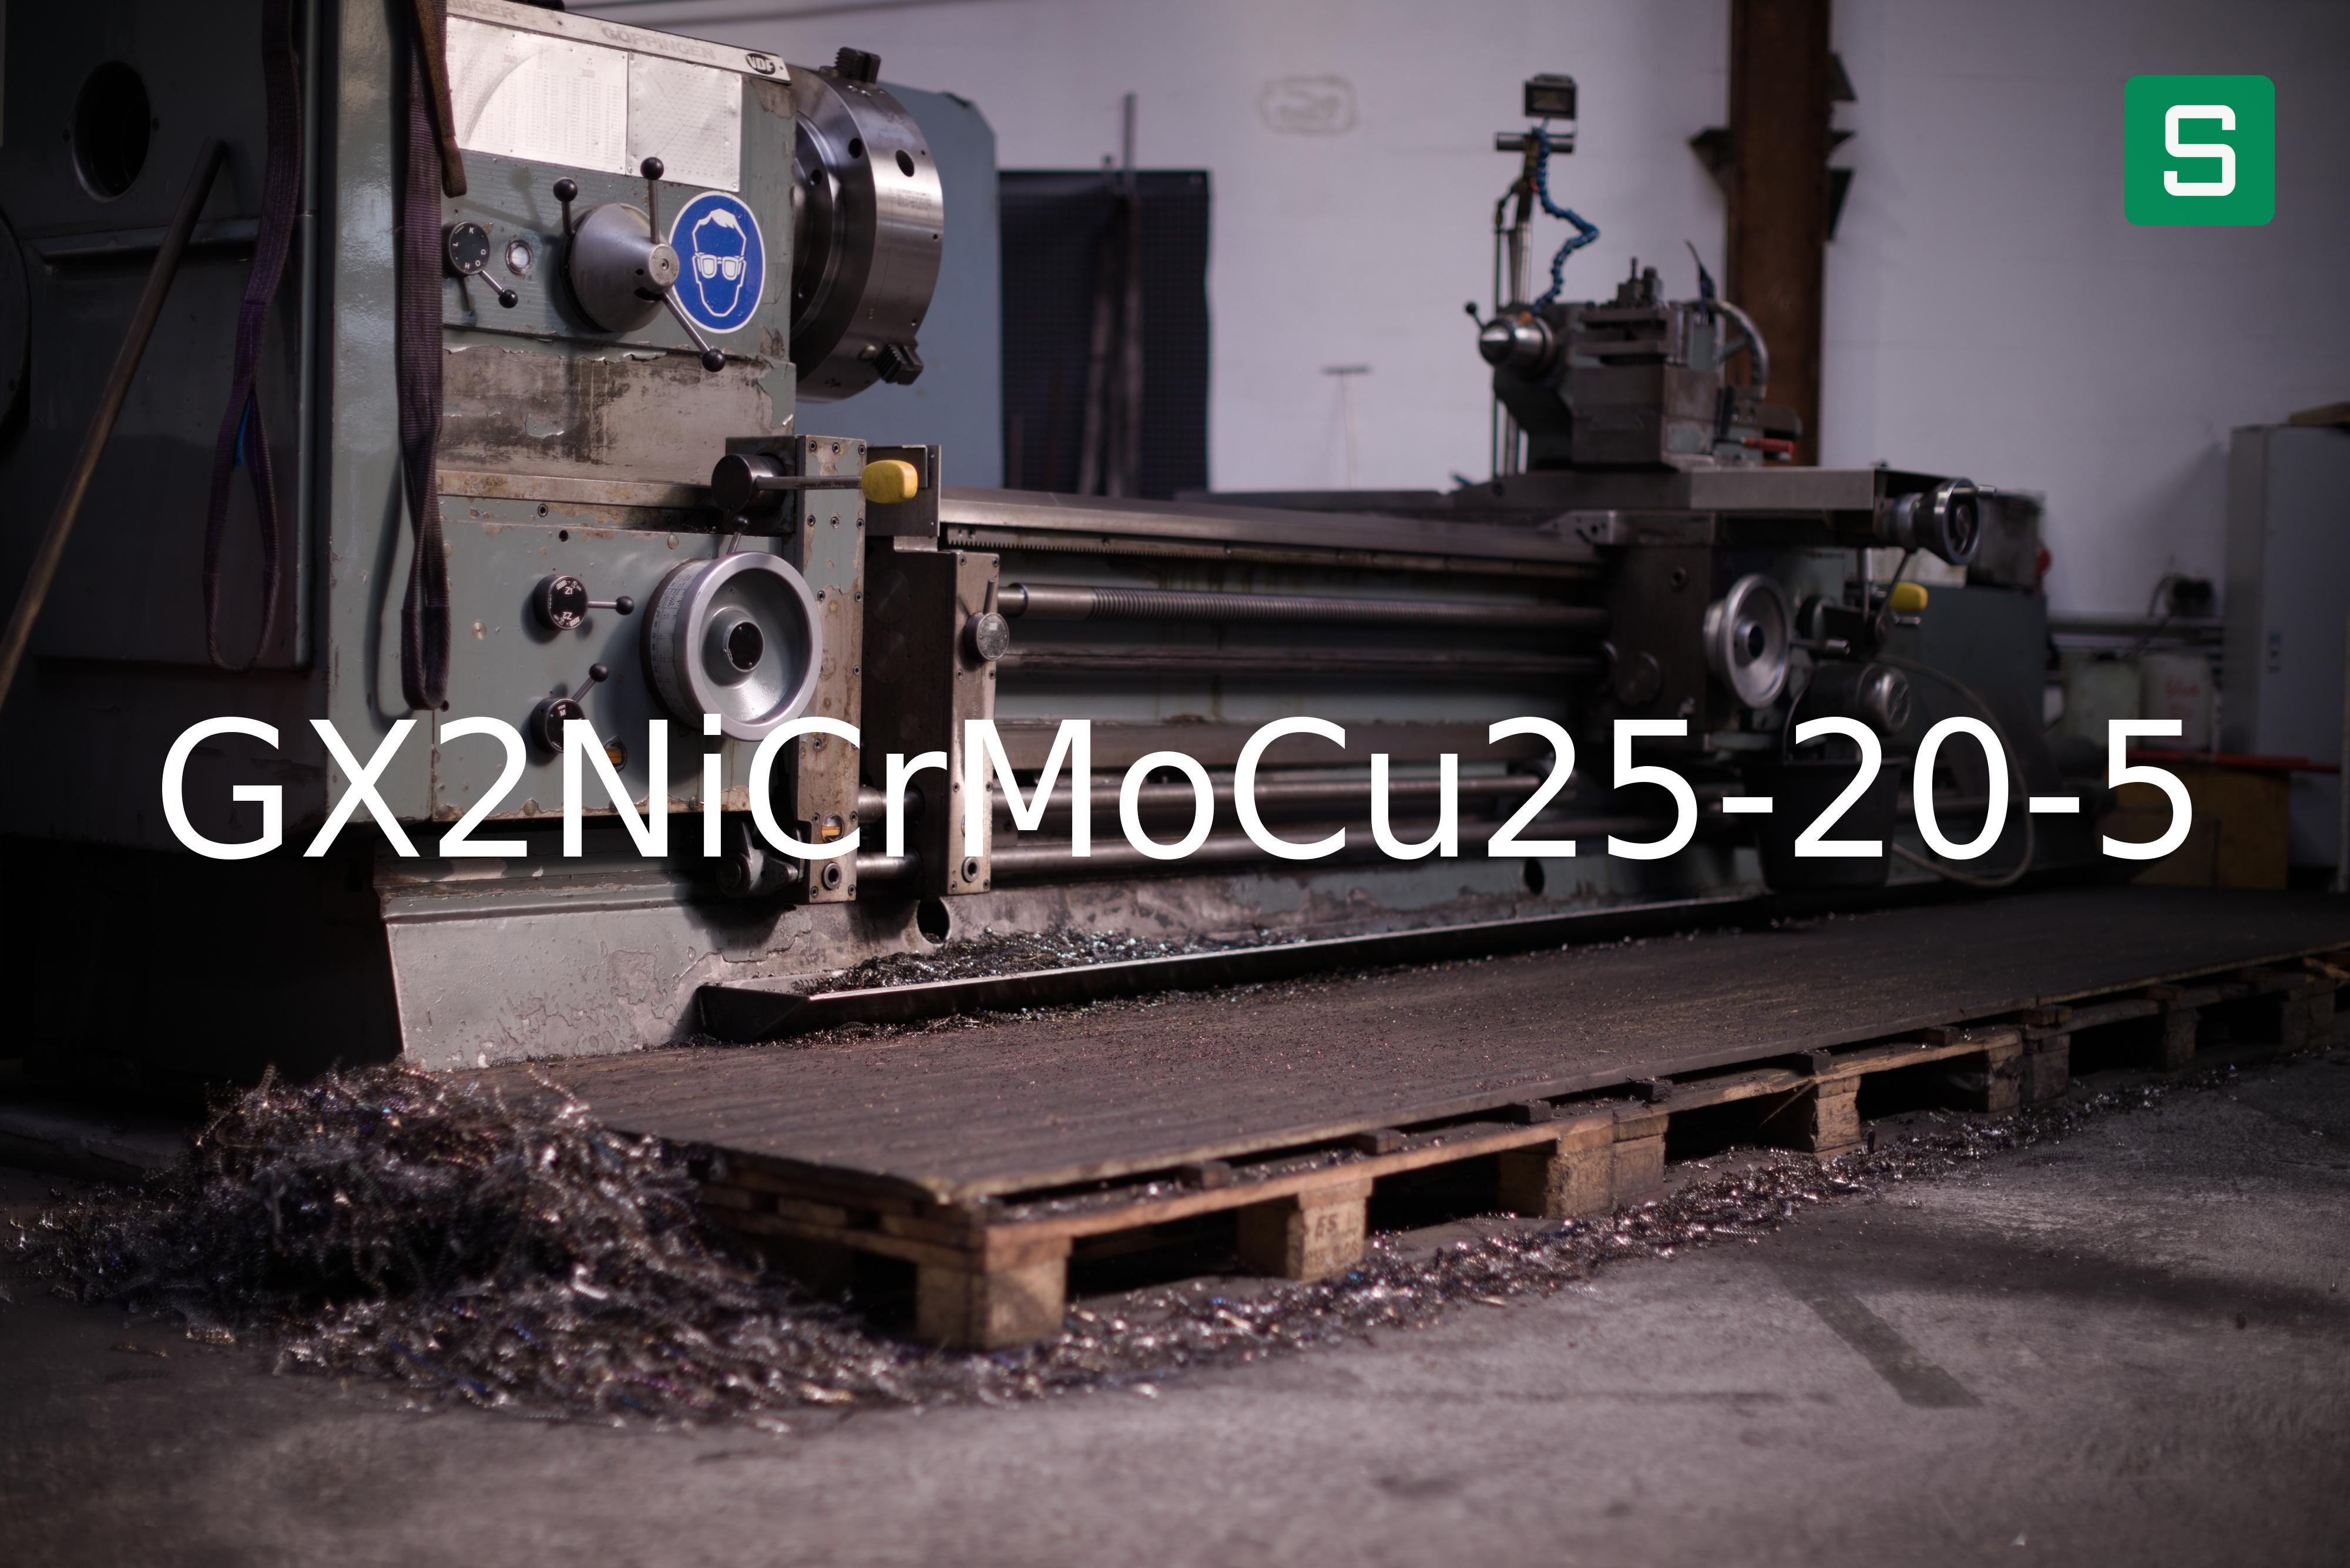 Steel Material: GX2NiCrMoCu25-20-5